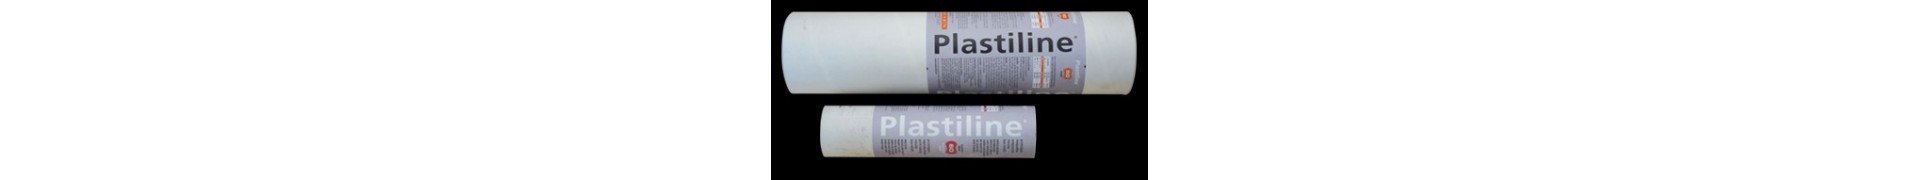 PLASTILINE HERBIN 60 1 Kg 1/2 DURE PLASTILINE IVOIRE 